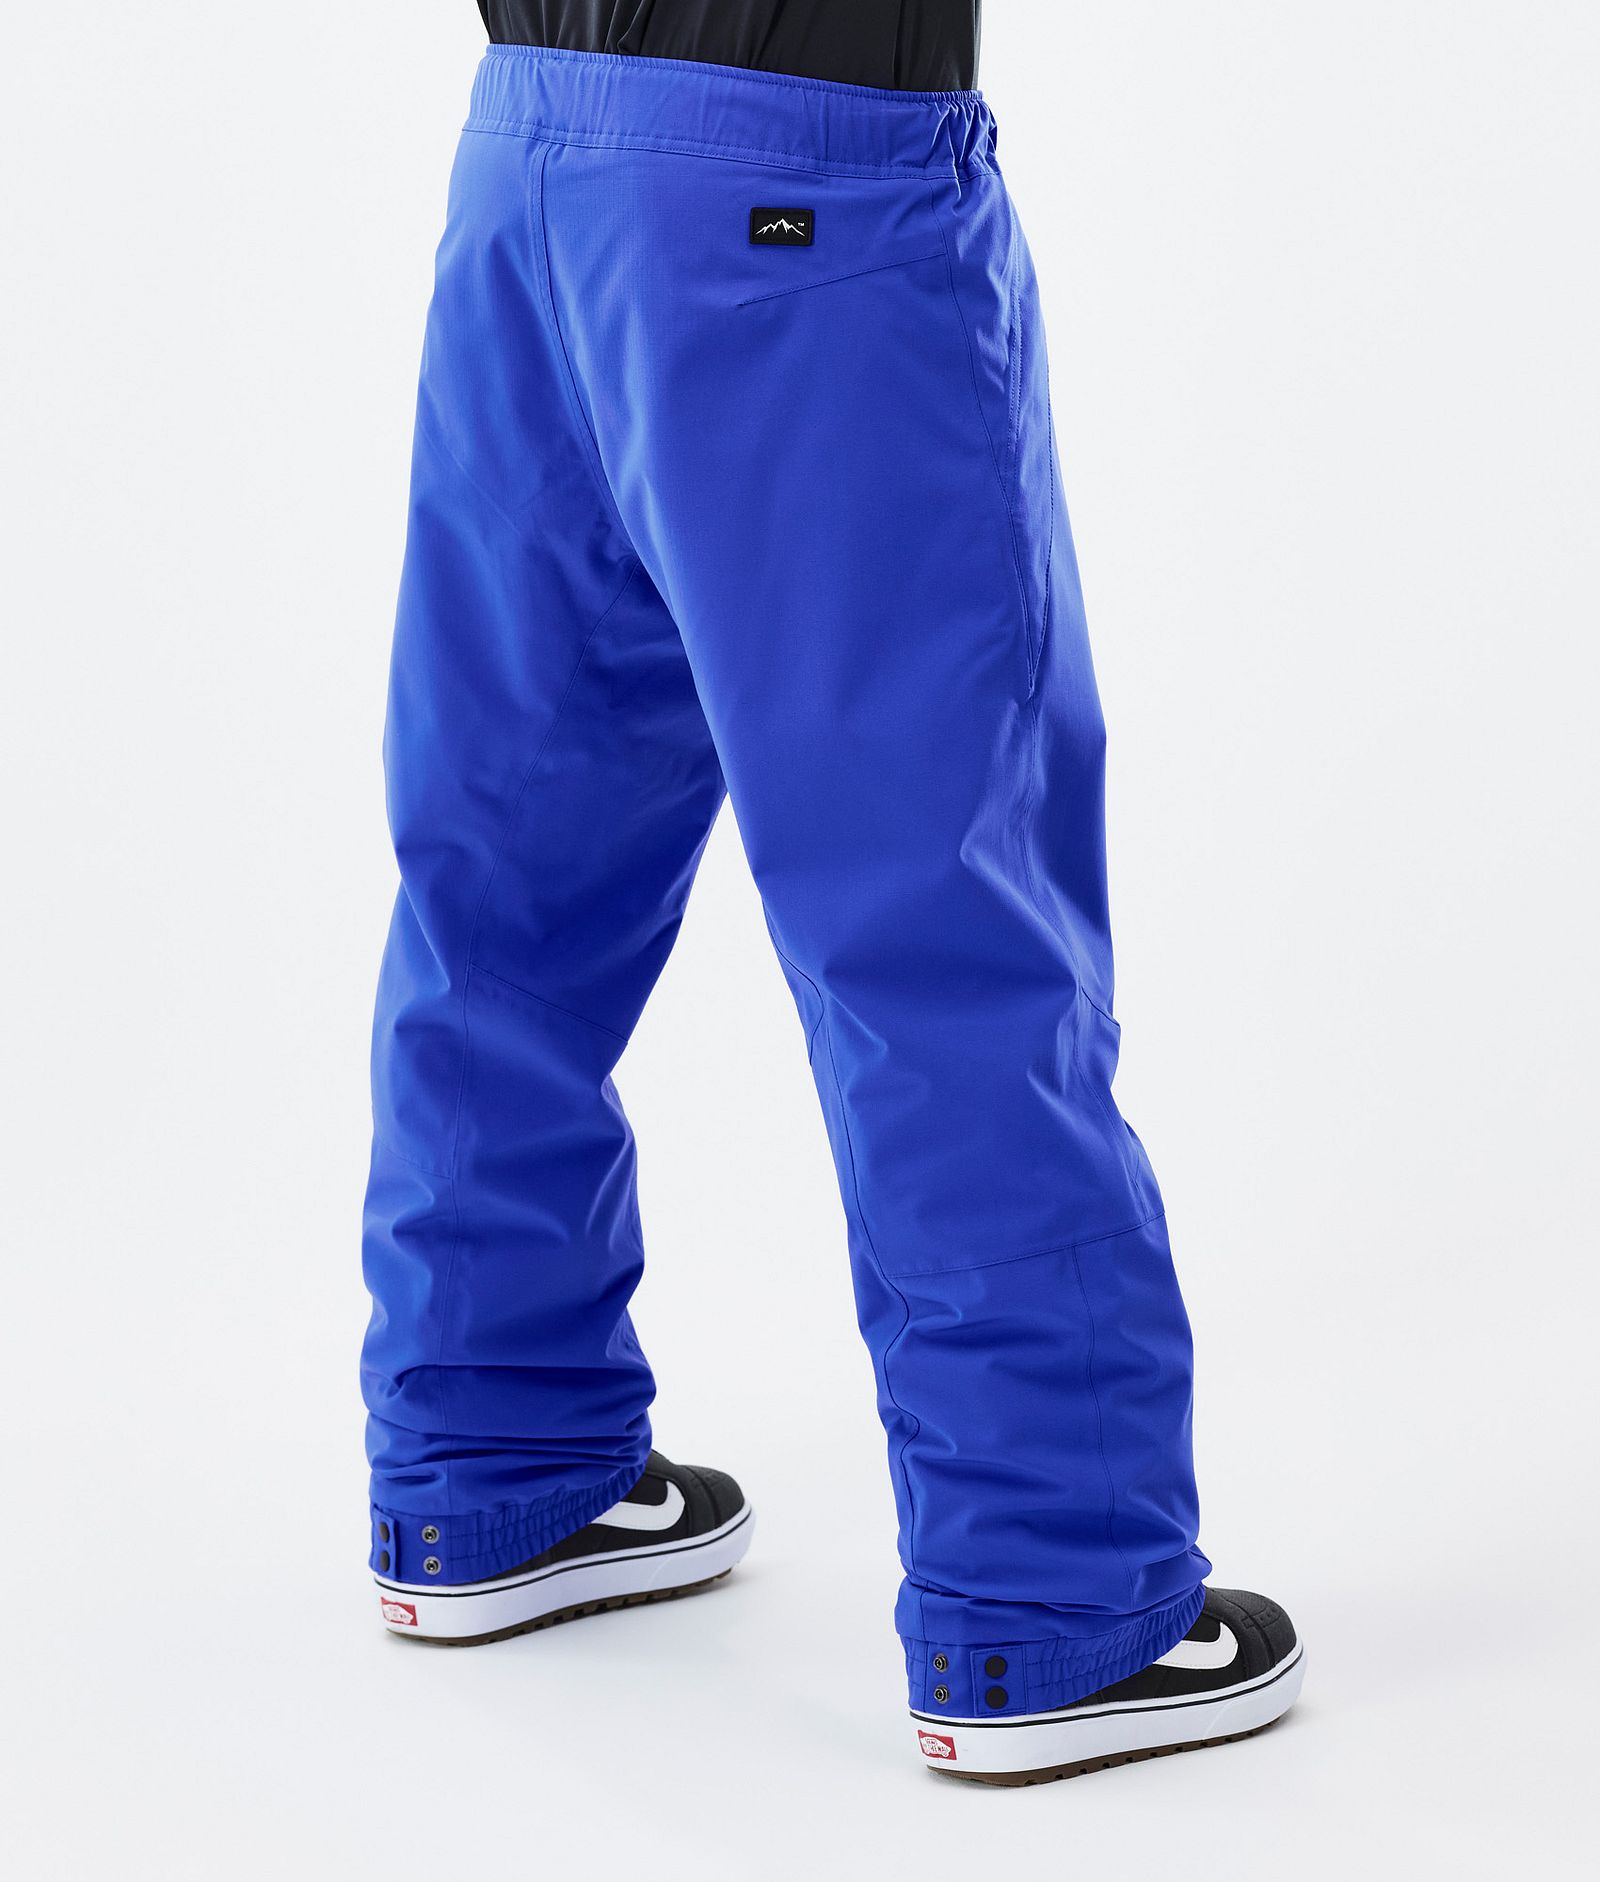 Blizzard Pantalones Snowboard Hombre Cobalt Blue